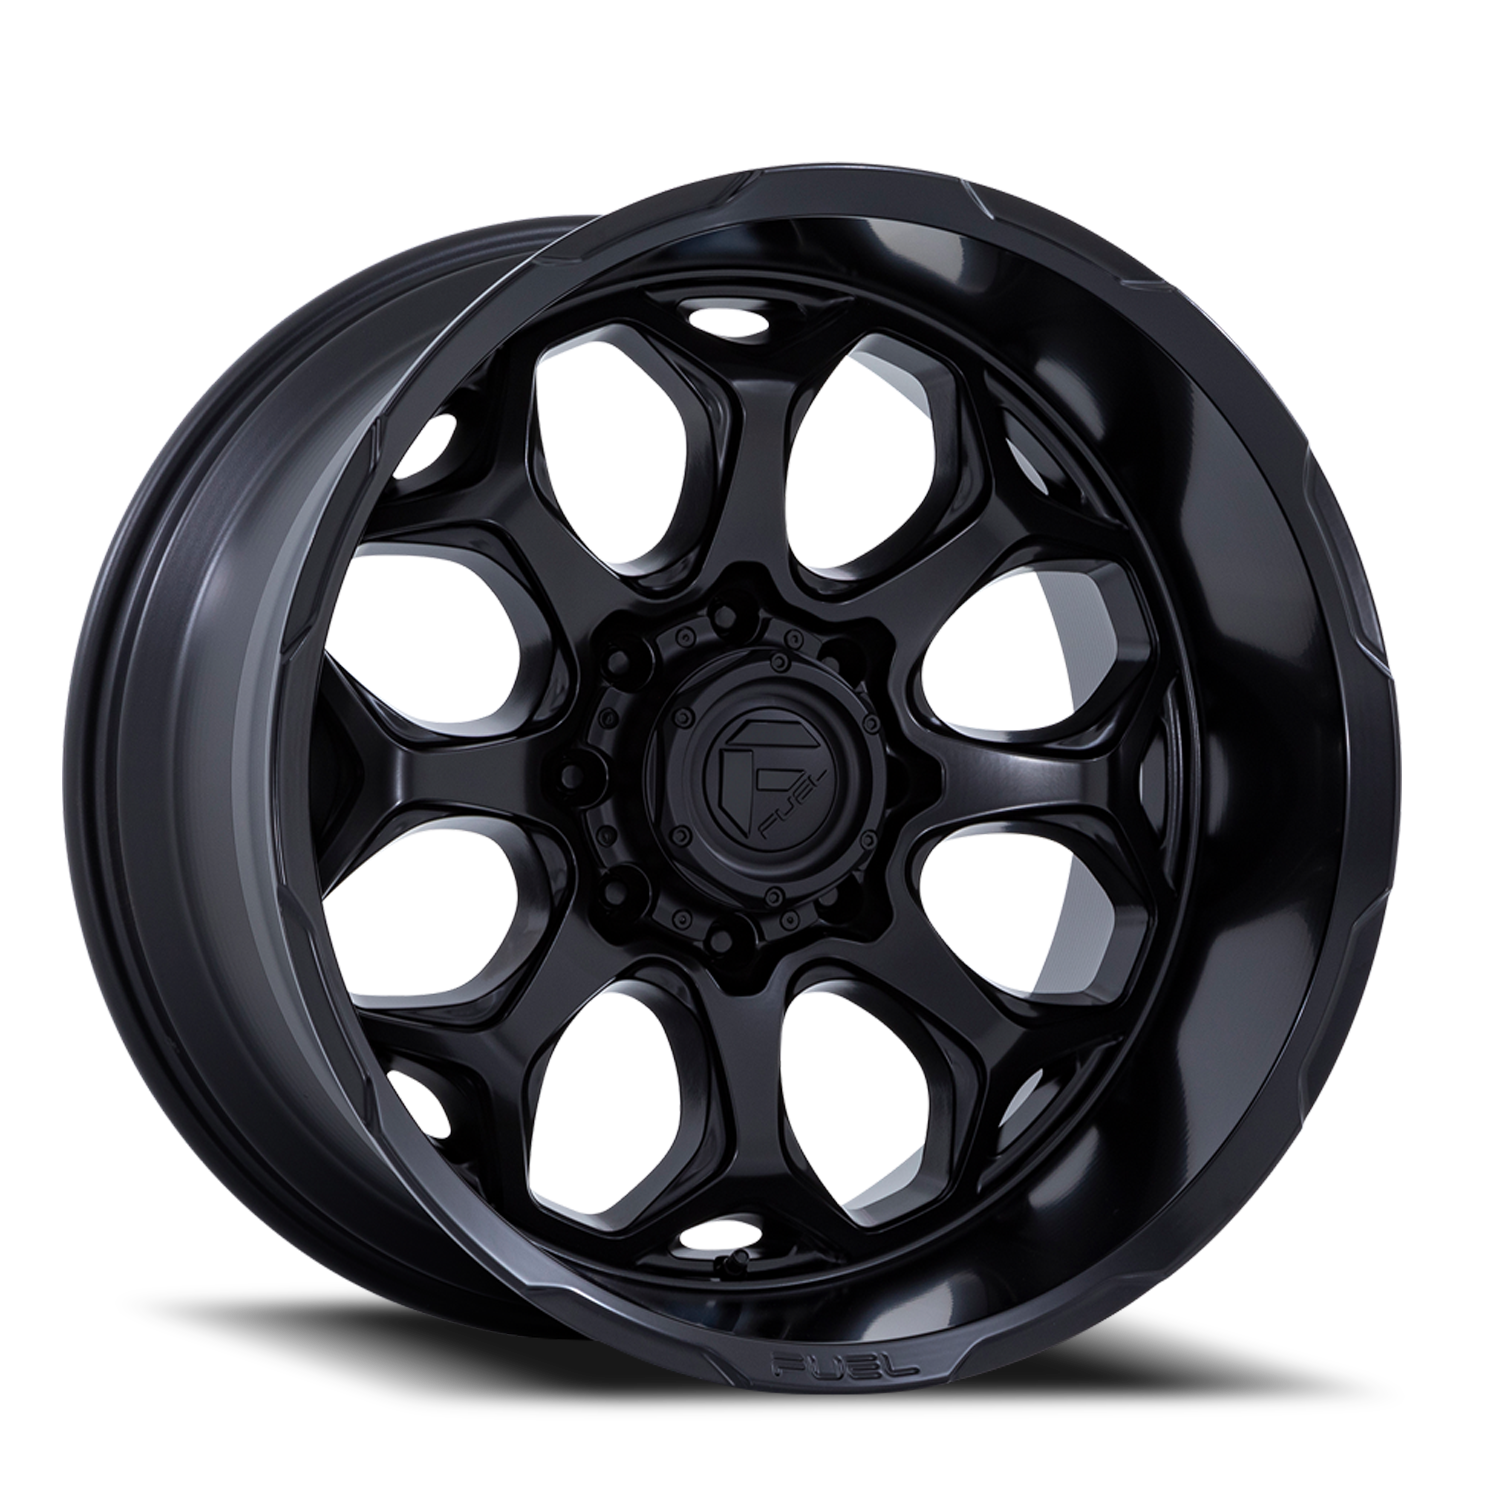 Aluminum Wheels 20X10 Scepter FC862 MX 6 On 139.7 Blackout 106.1 Bore -18 Offset Fuel Off Road Wheels